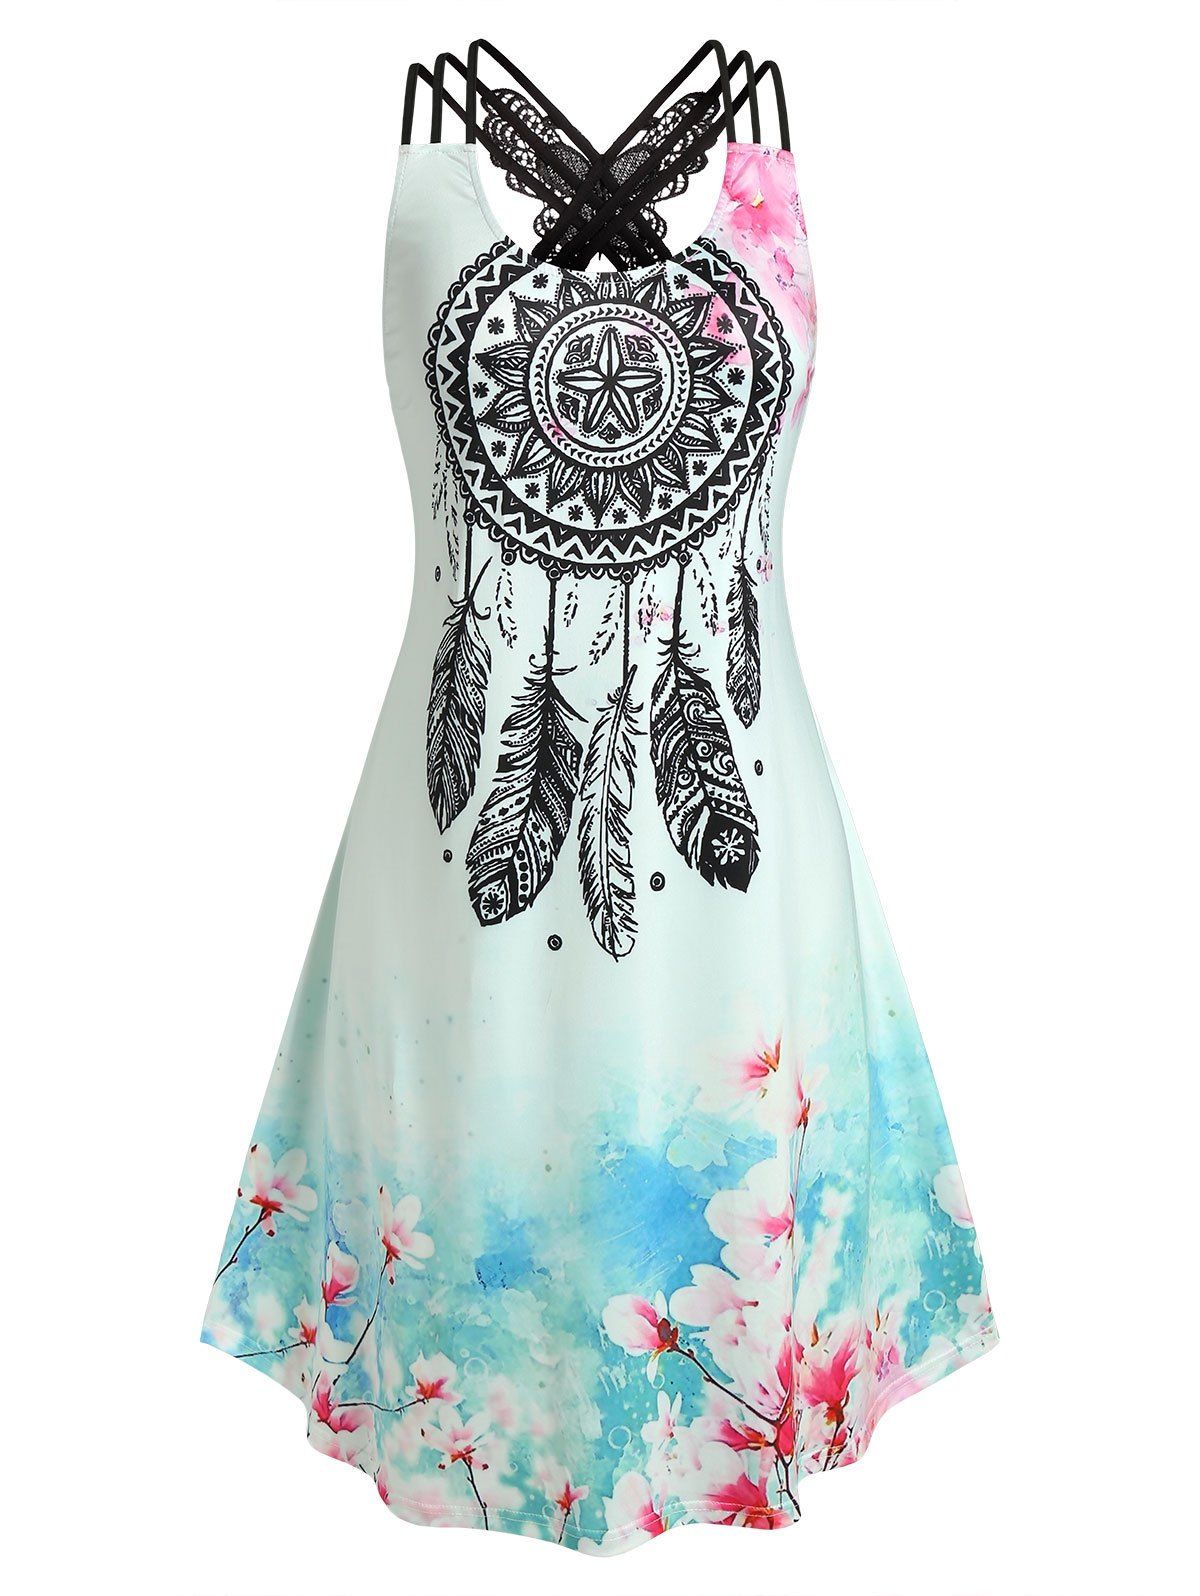 Plus Size Floral Dreamcatcher Print Butterfly Lace Dress - LIGHT GREEN 2X